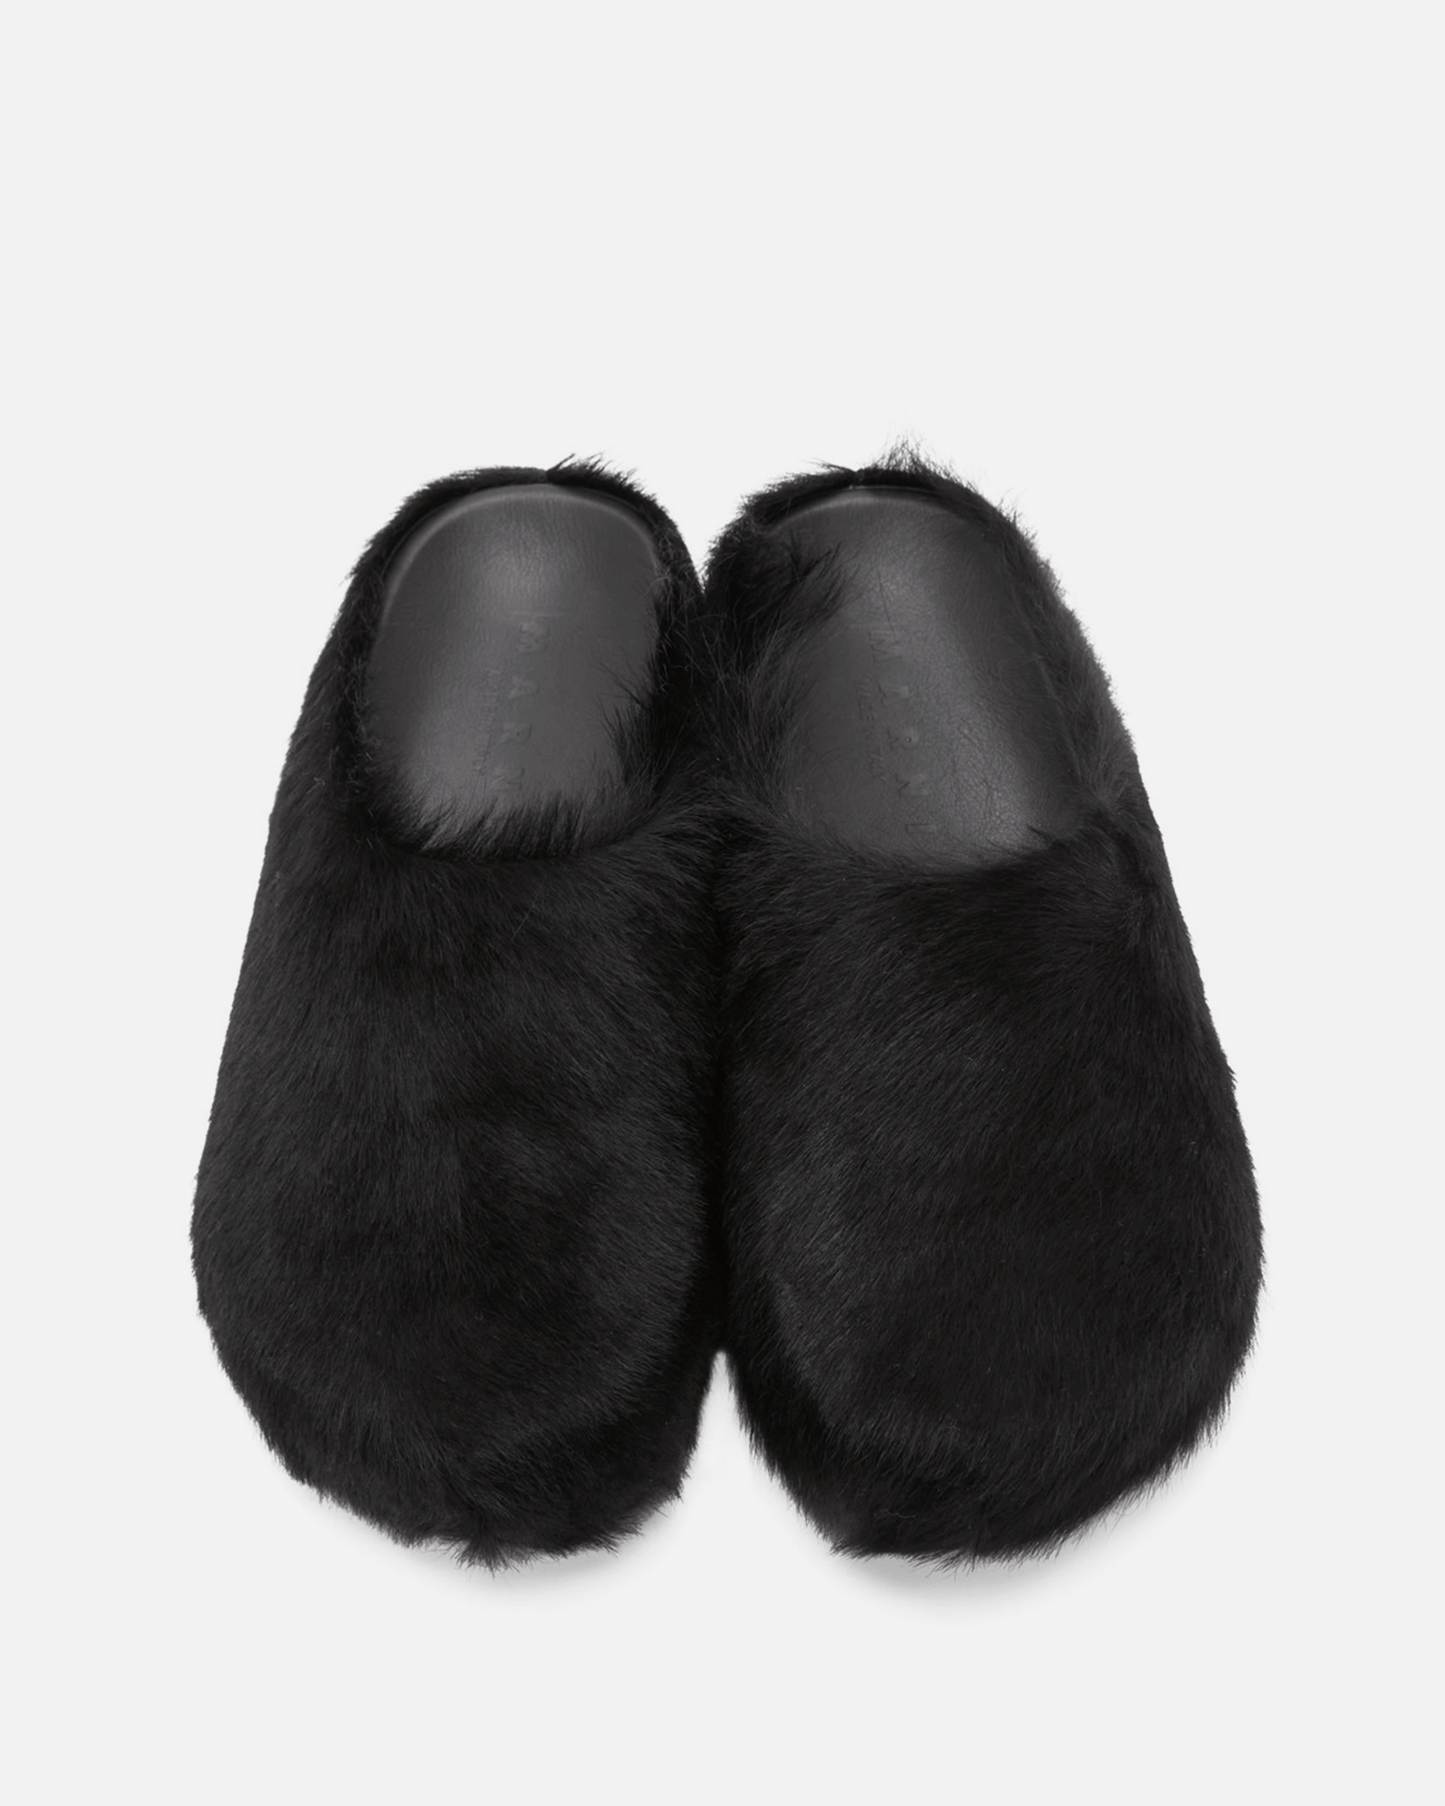 Marni Men's Shoes Calf-Hair Sabot in Black